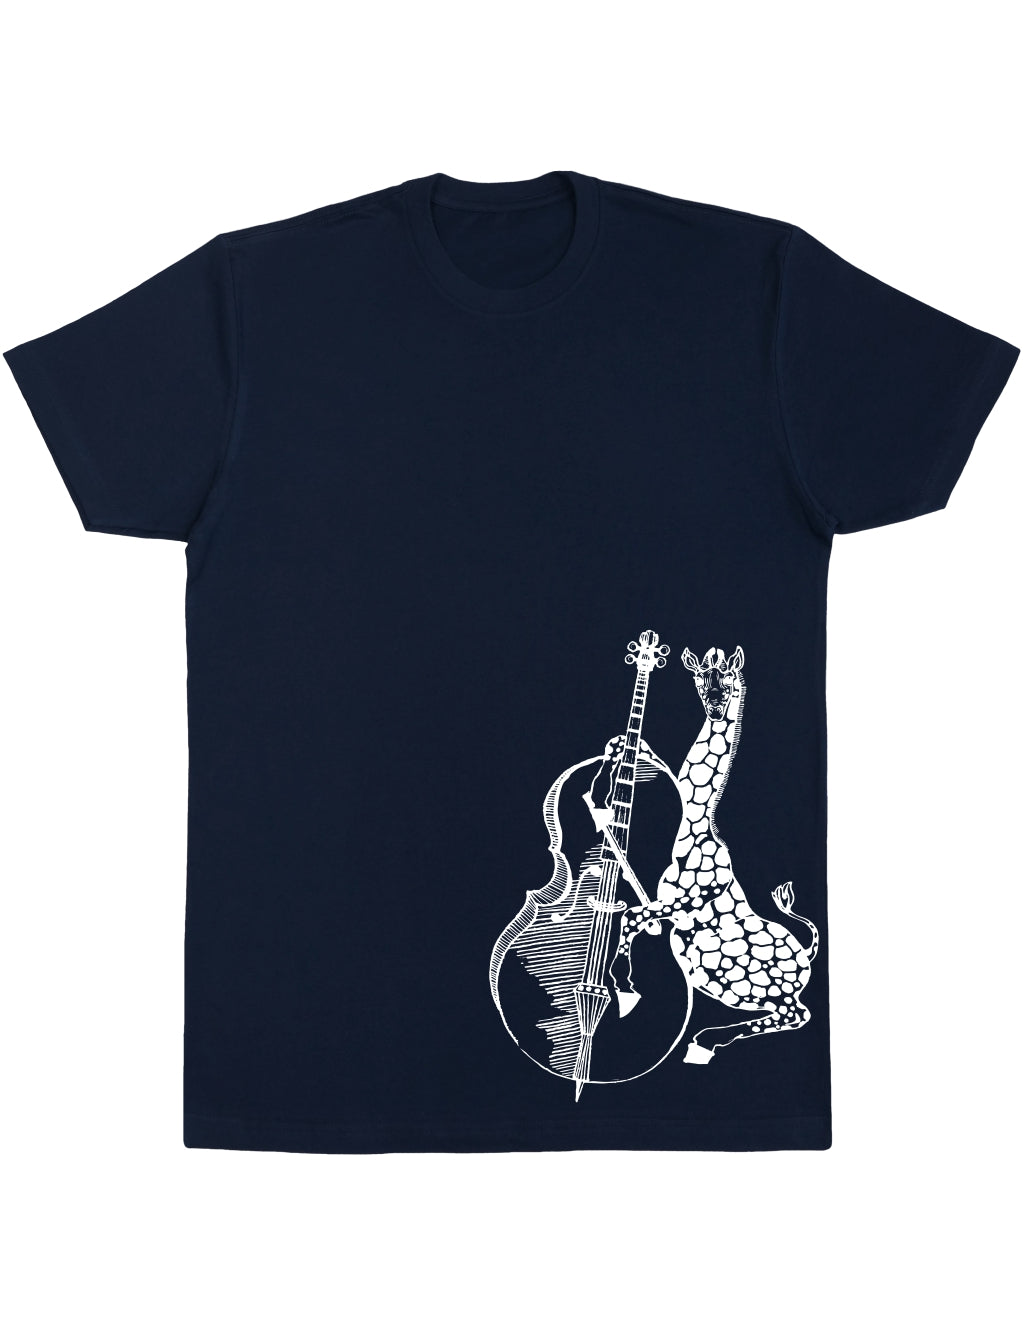 SEEMBO Giraffe Playing Cello Funny Cellist Musician Men Cotton T-Shirt Side Print